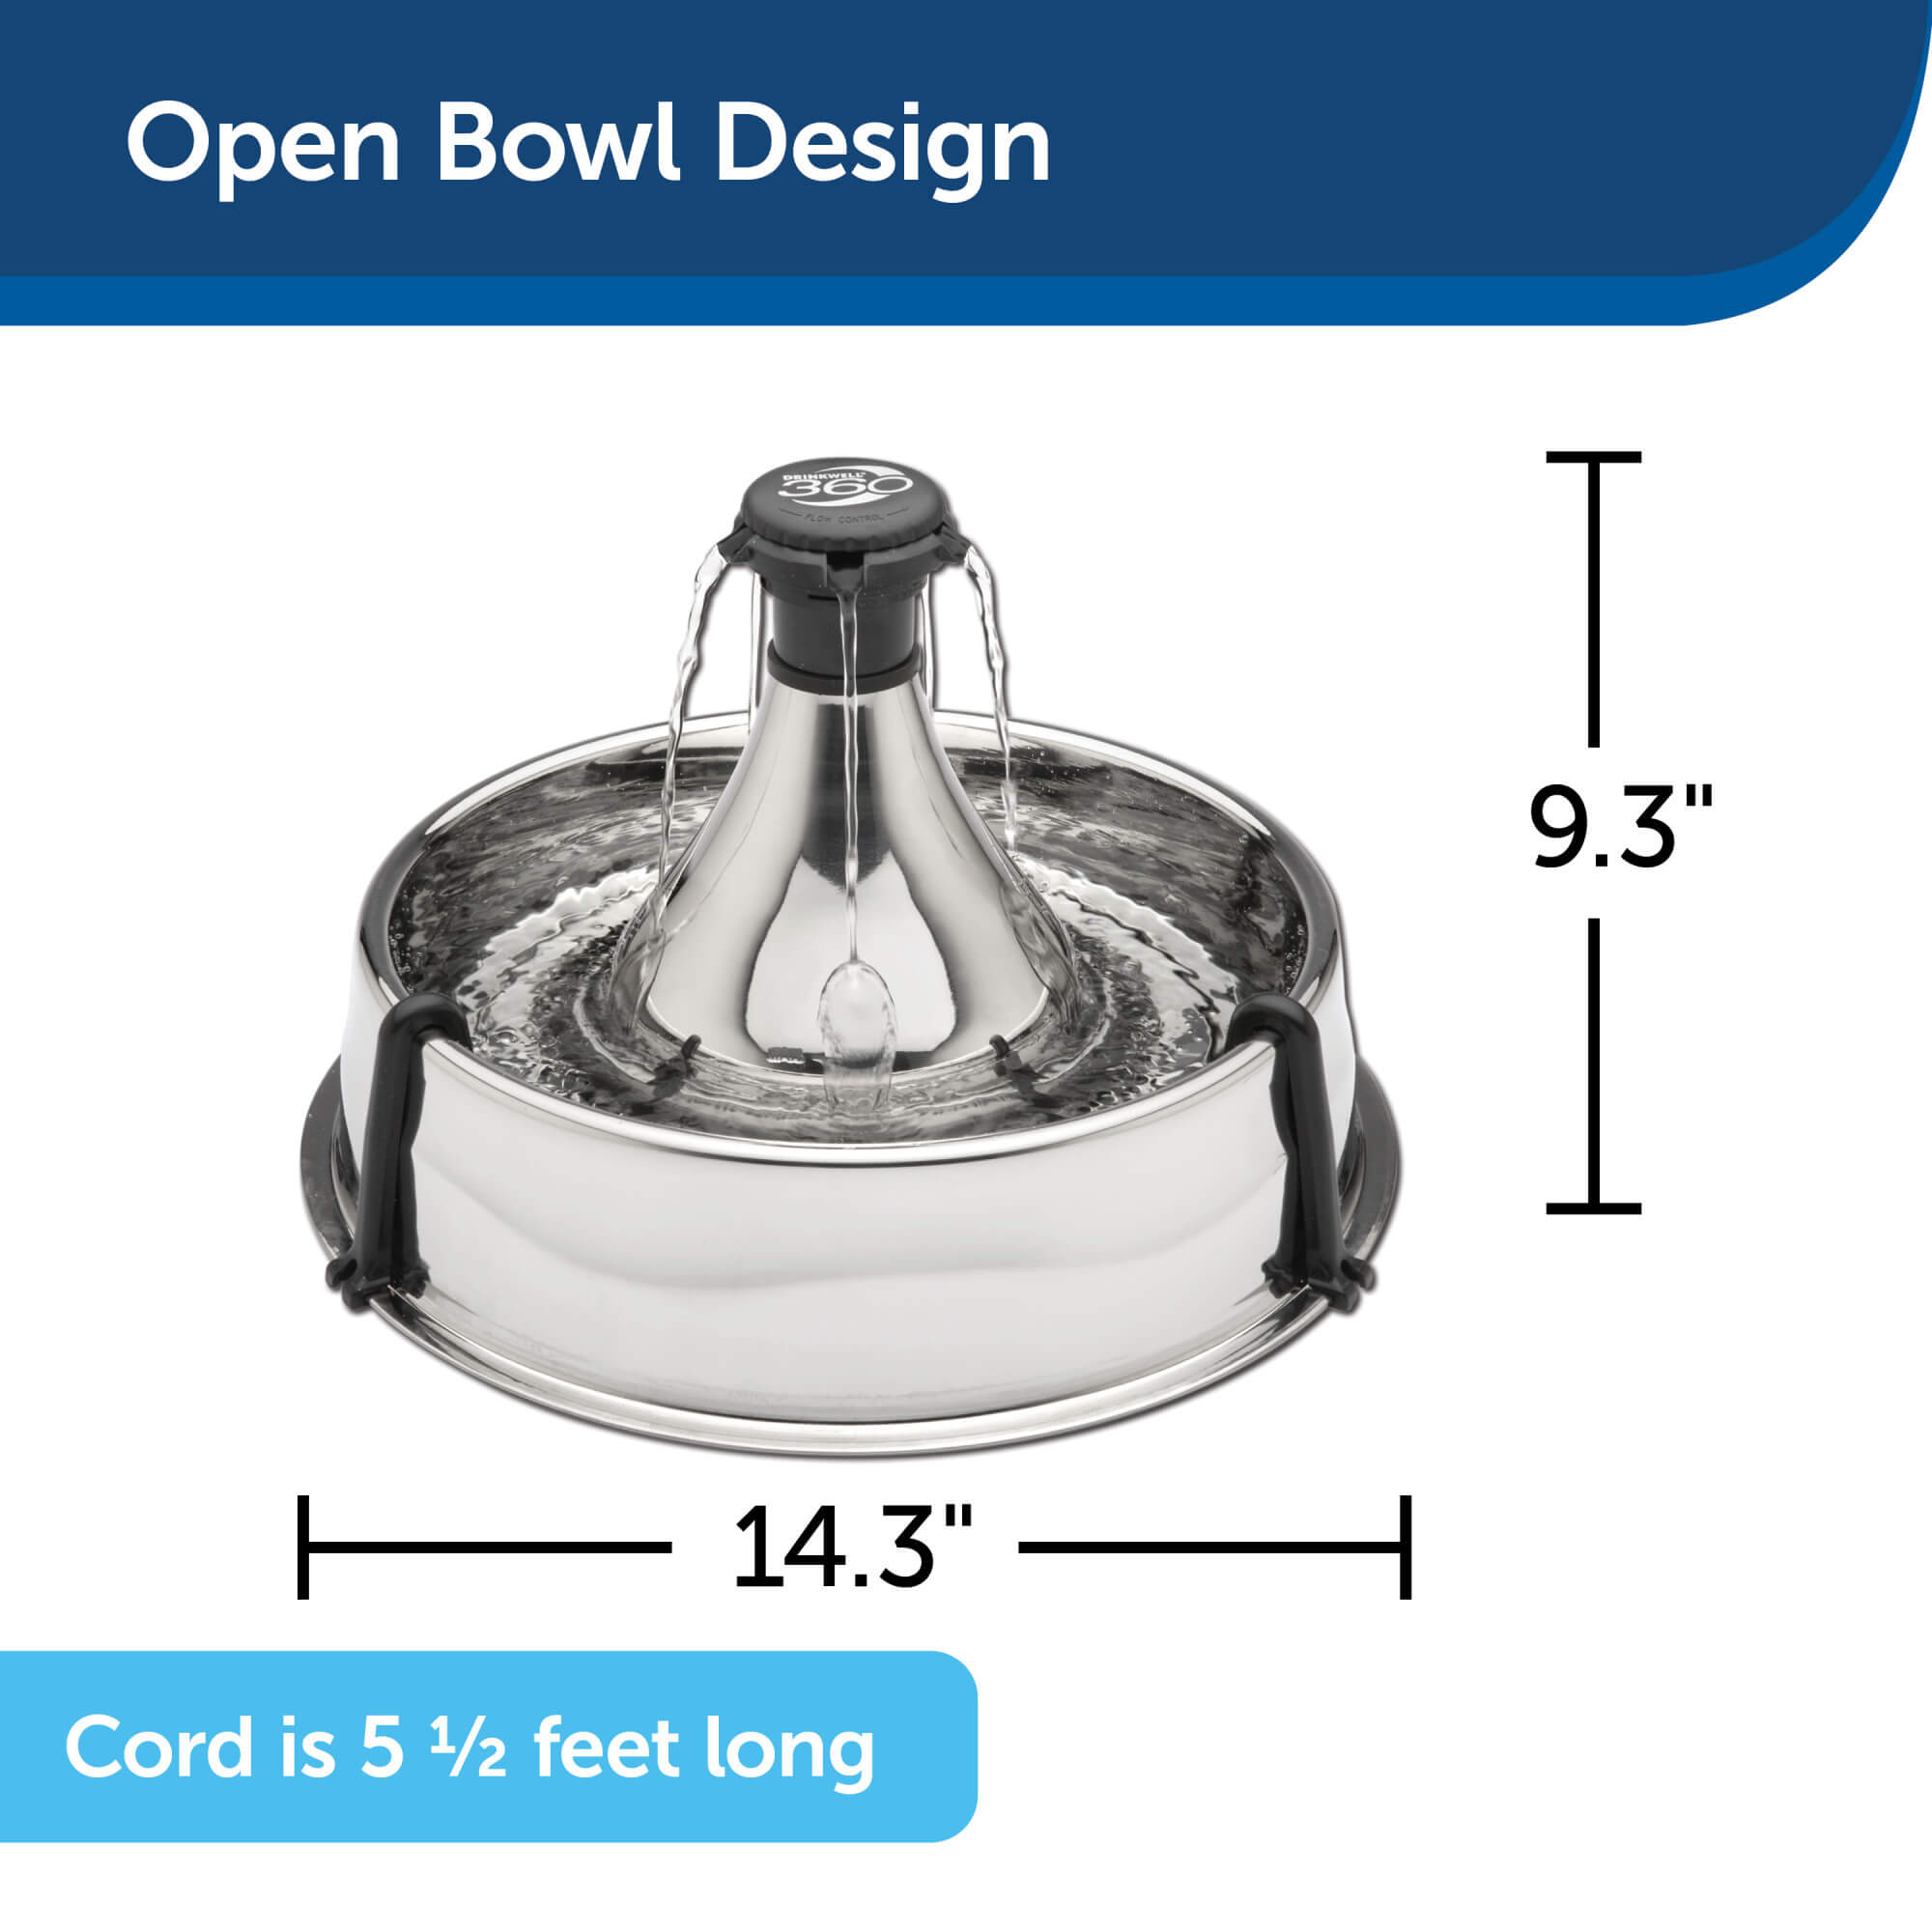 Open bowl design